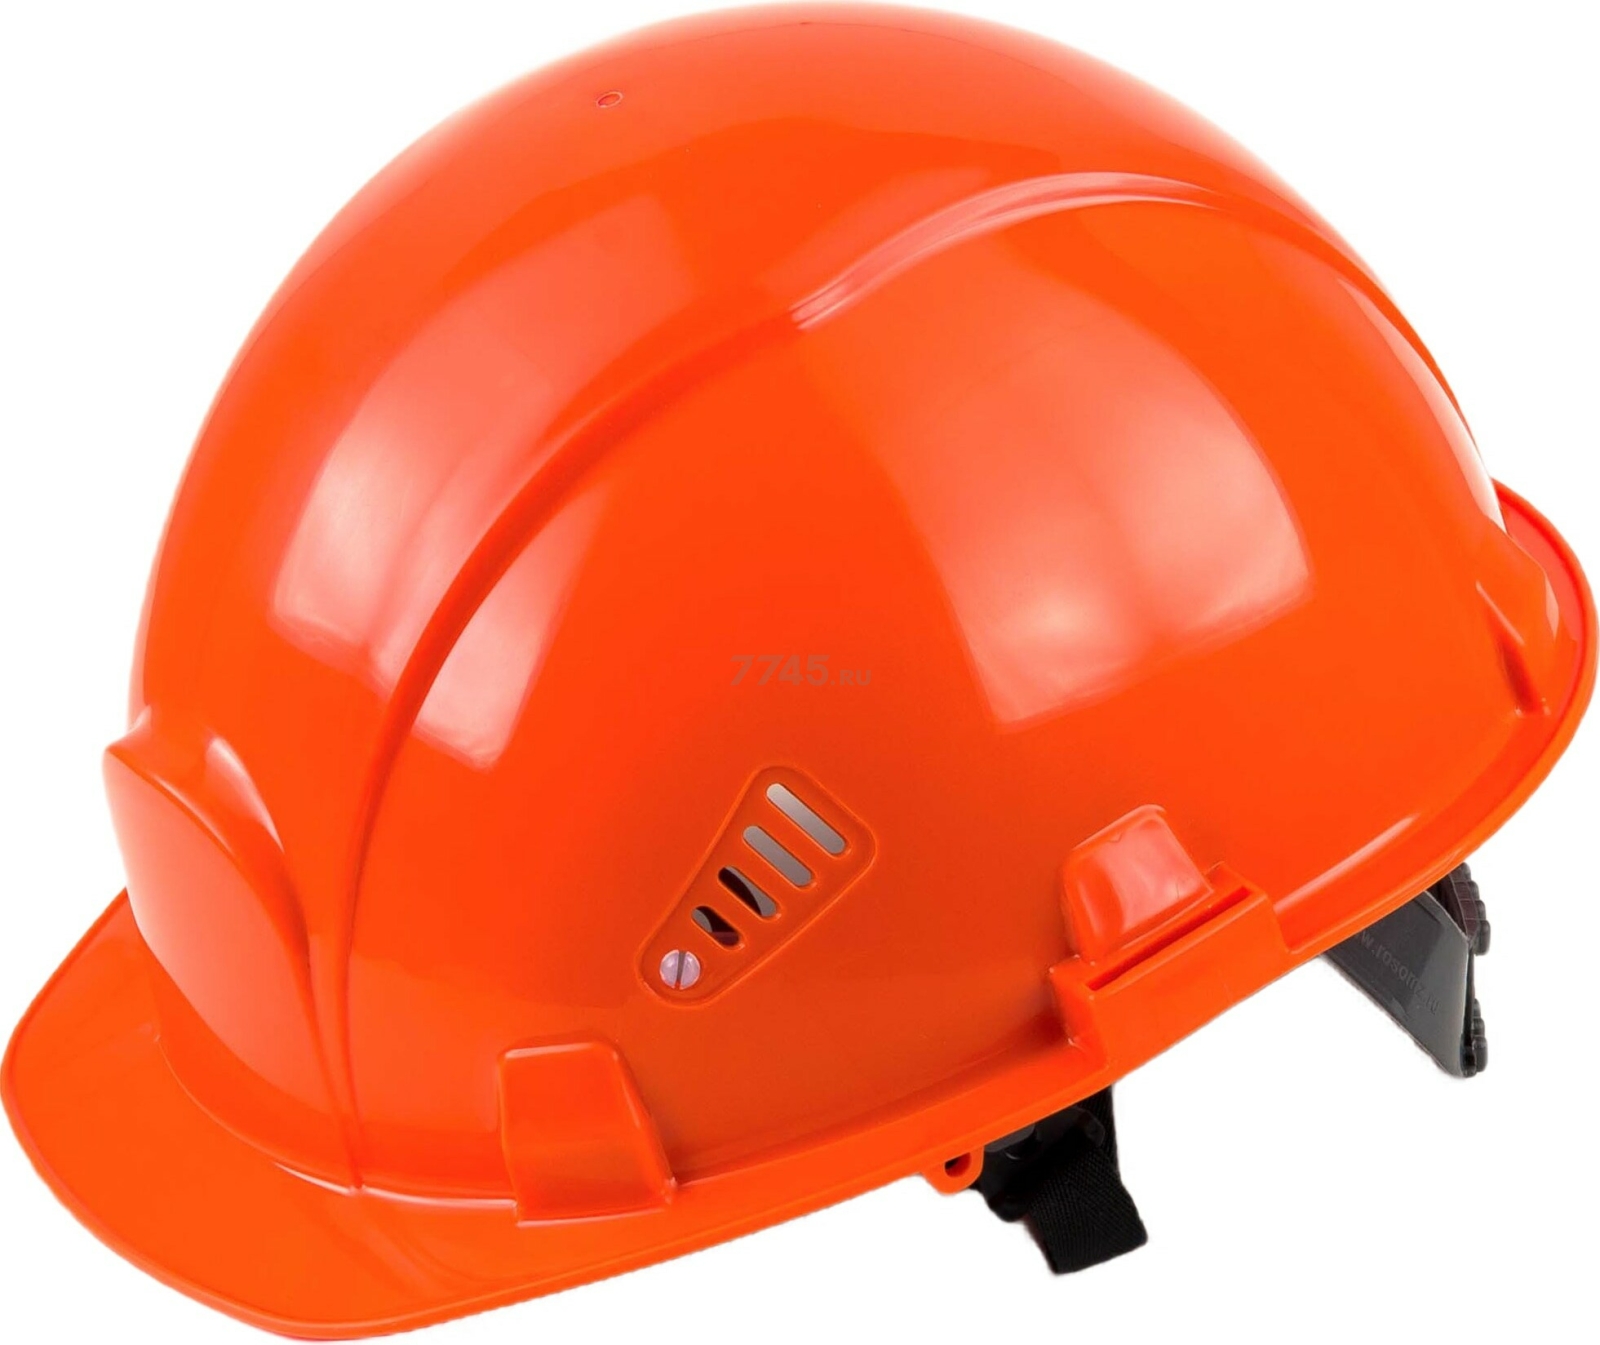 Каска защитная СОМЗ-55 Визион оранжевая (78214)